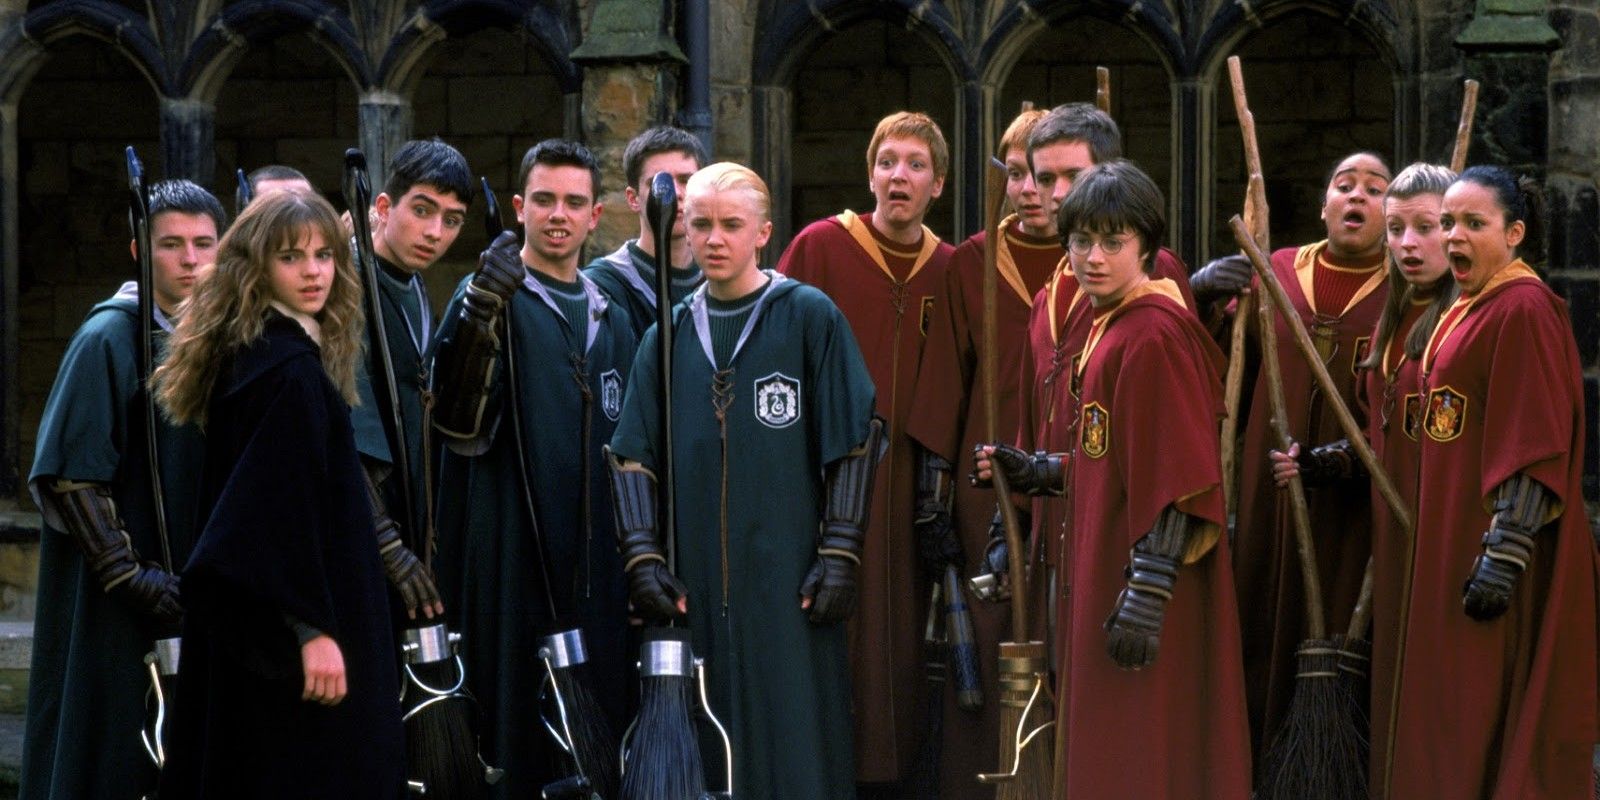 Harry Potter Quidditch League Plans Name Change Amid JK Rowling Backlash